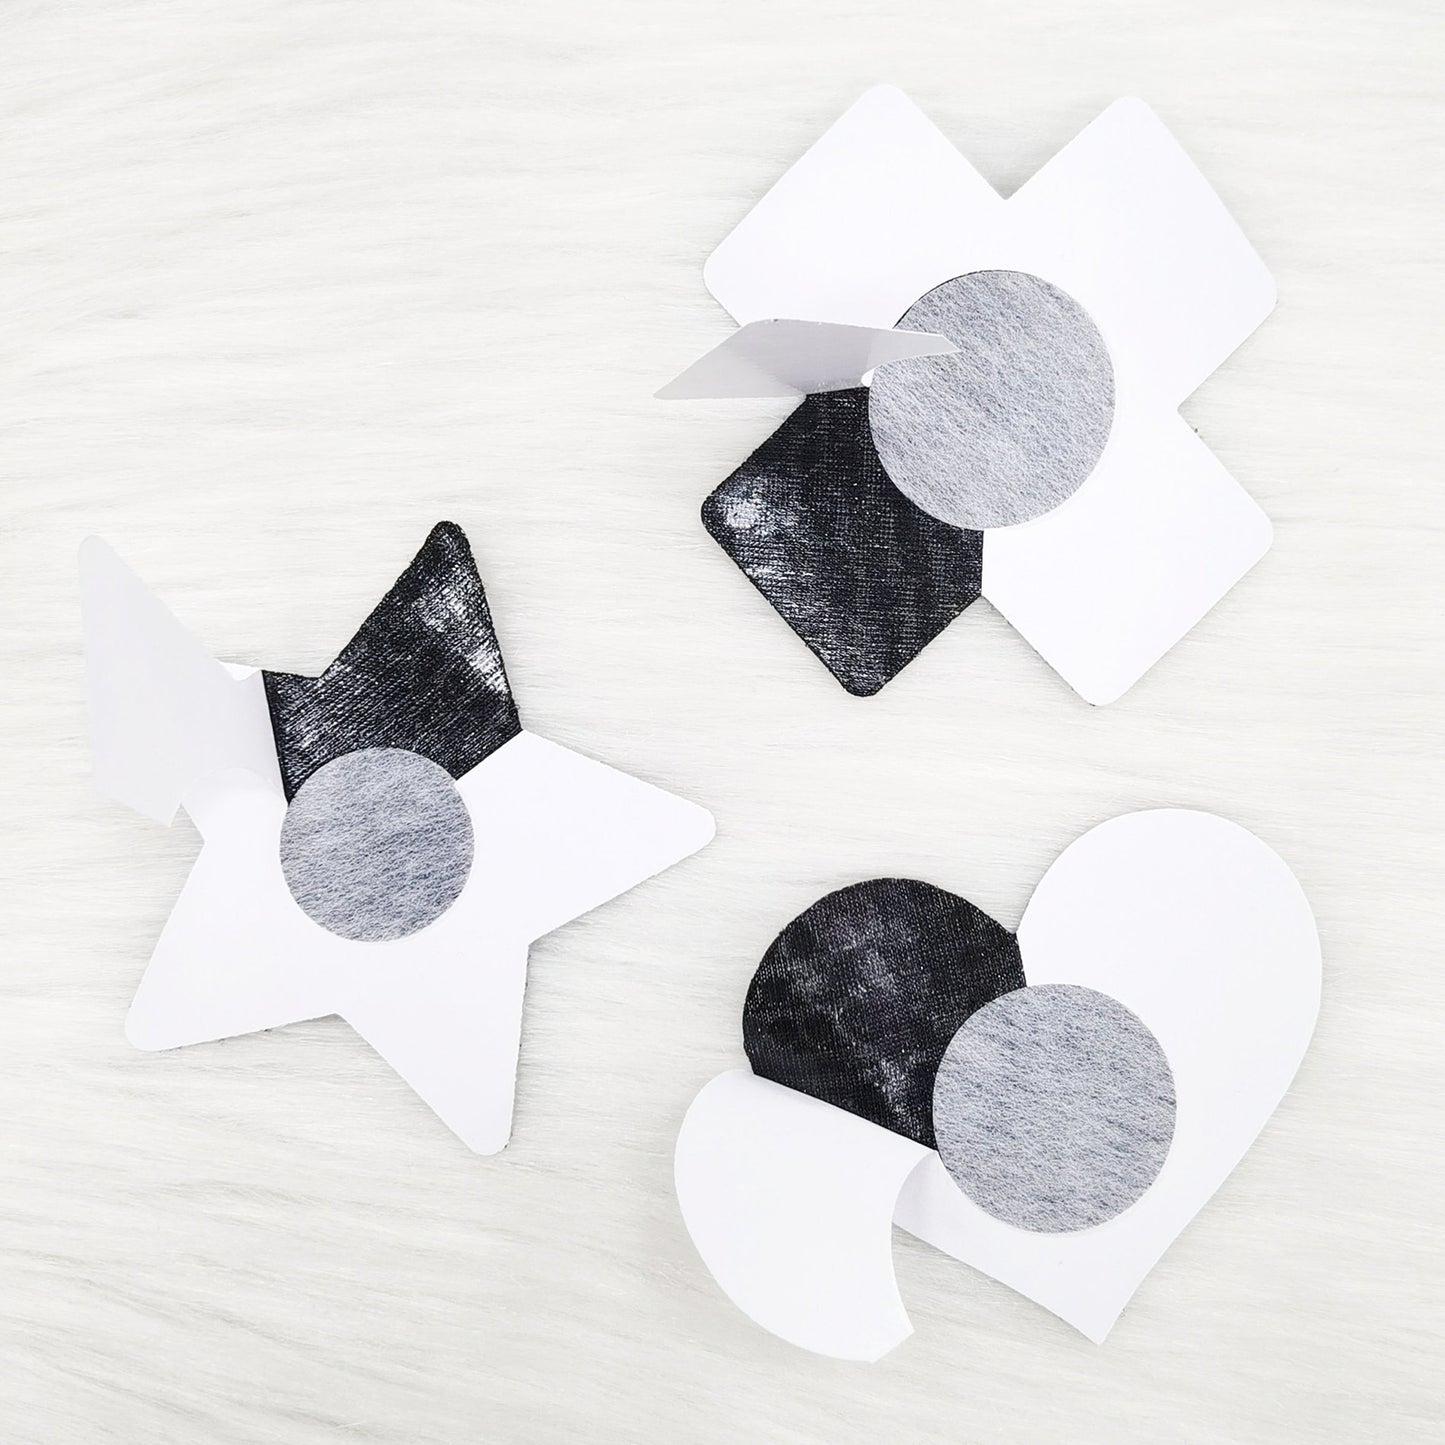 Yomorio 3 Pack Black Reflective Pasties Polka Dot Nippe Covers Pasties